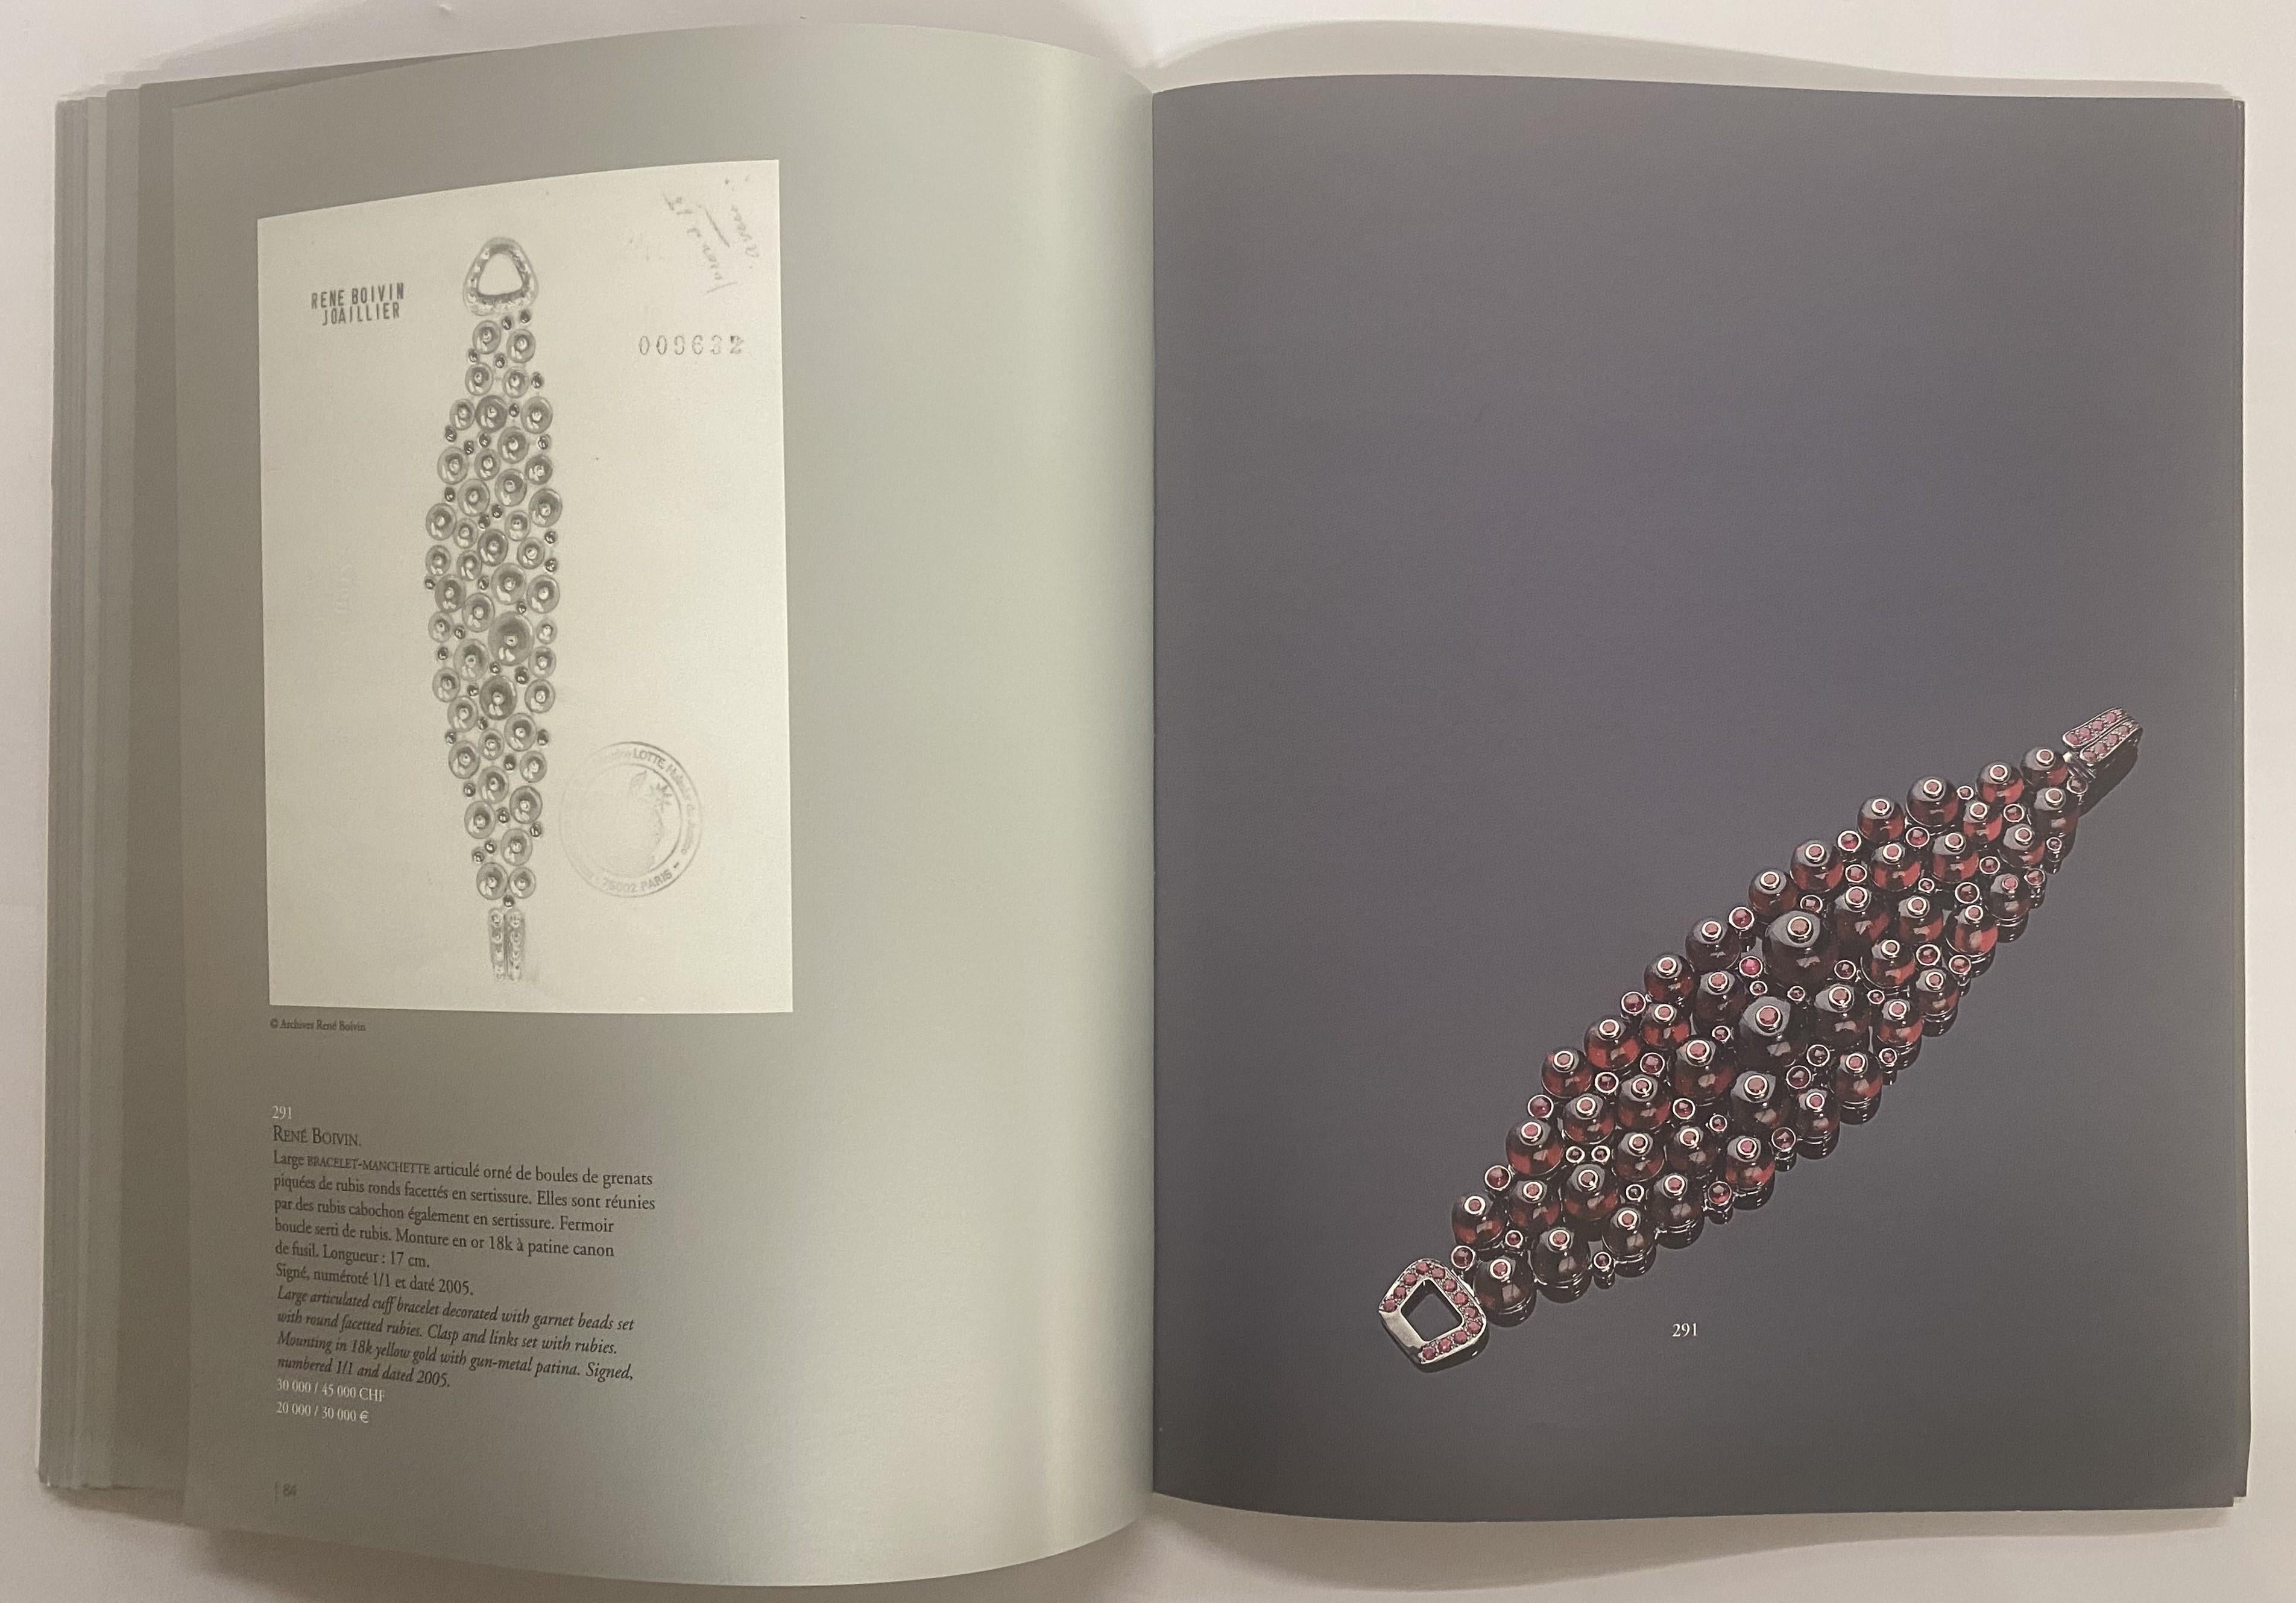 Vente Bijoux: Creations Rene Boivin (Book) For Sale 5